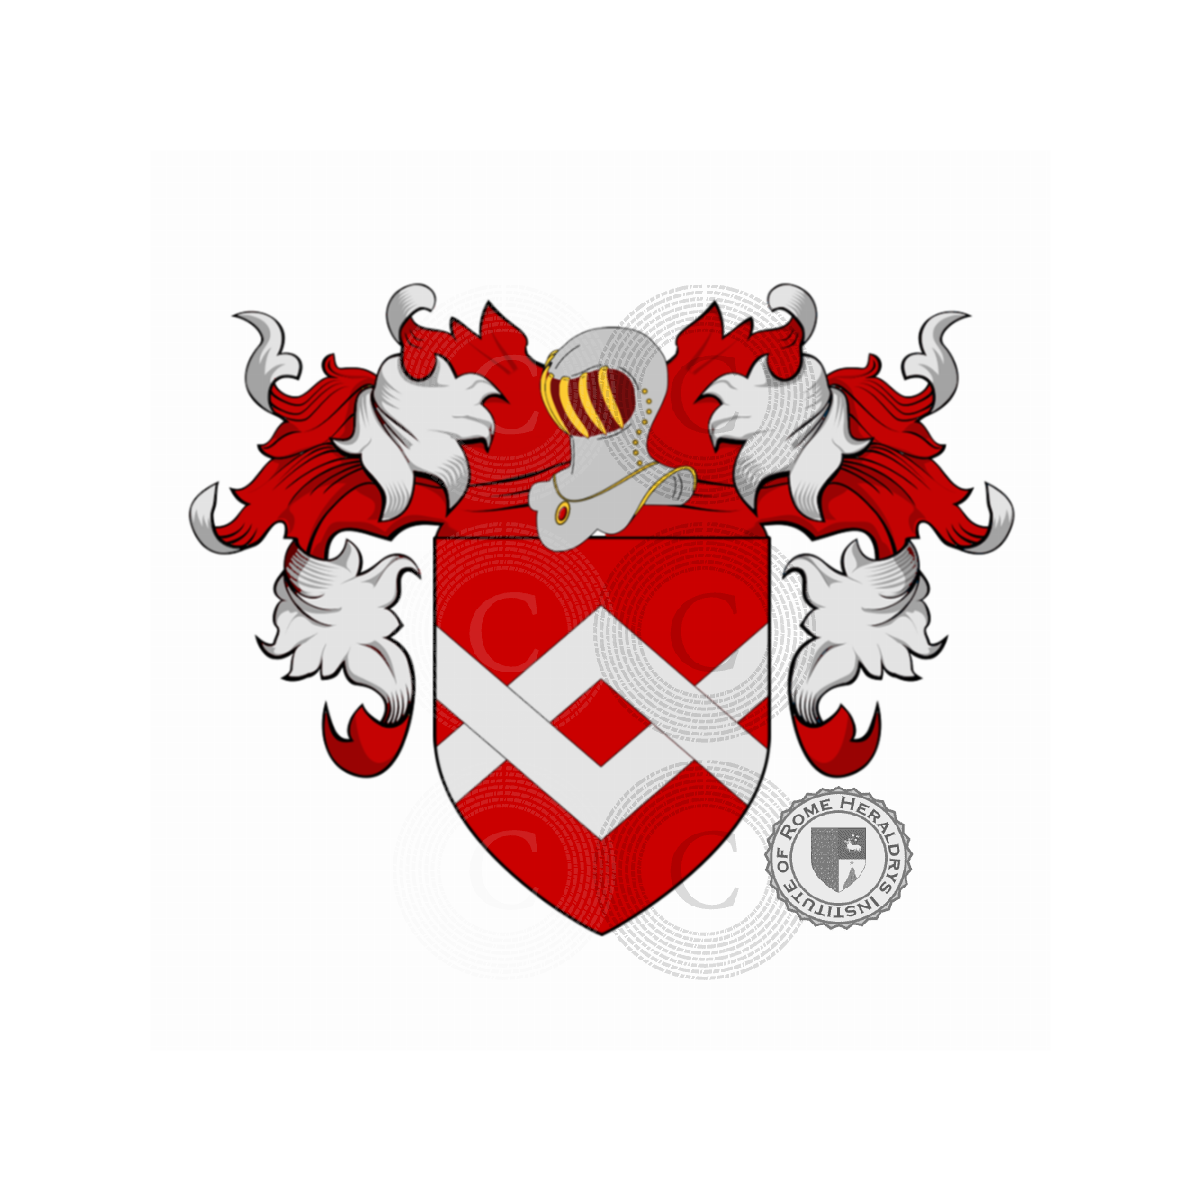 Coat of arms of familyMalpighi